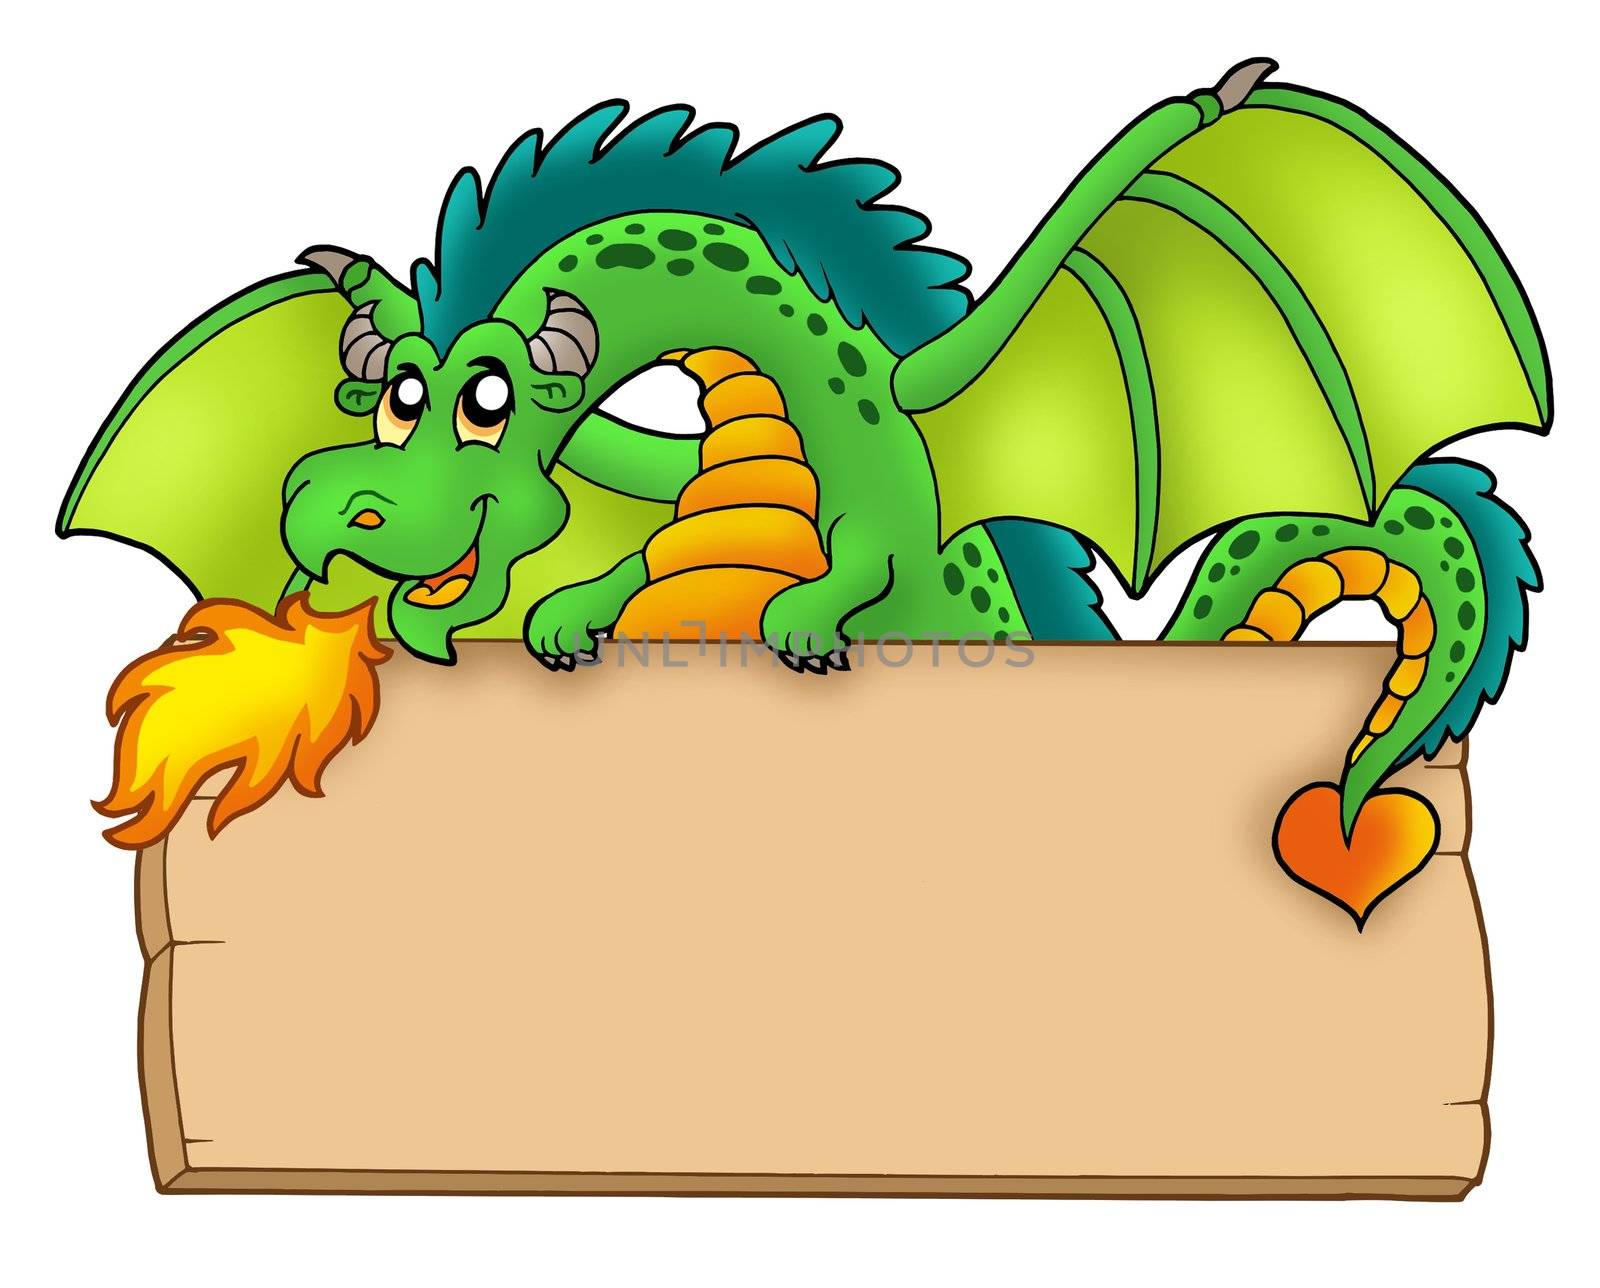 Giant green dragon holding board - color illustration.